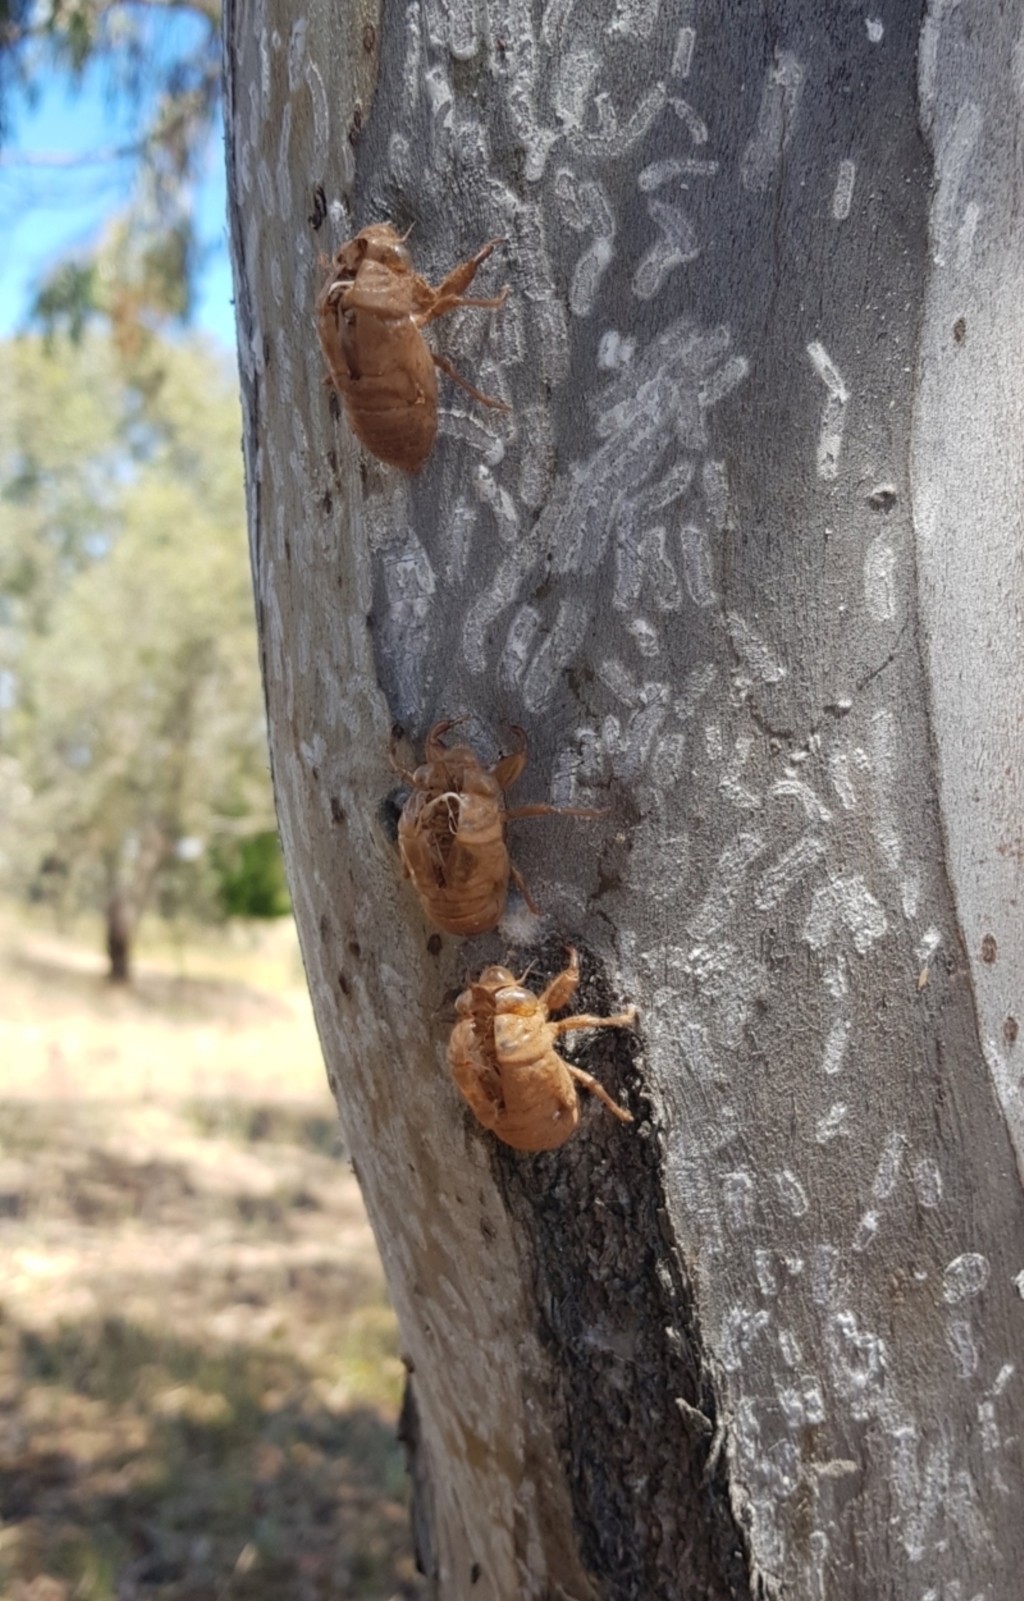 Eriococcidae sp. on Eucalyptus blakelyi at Watson, ACT - 12 Jan 2021